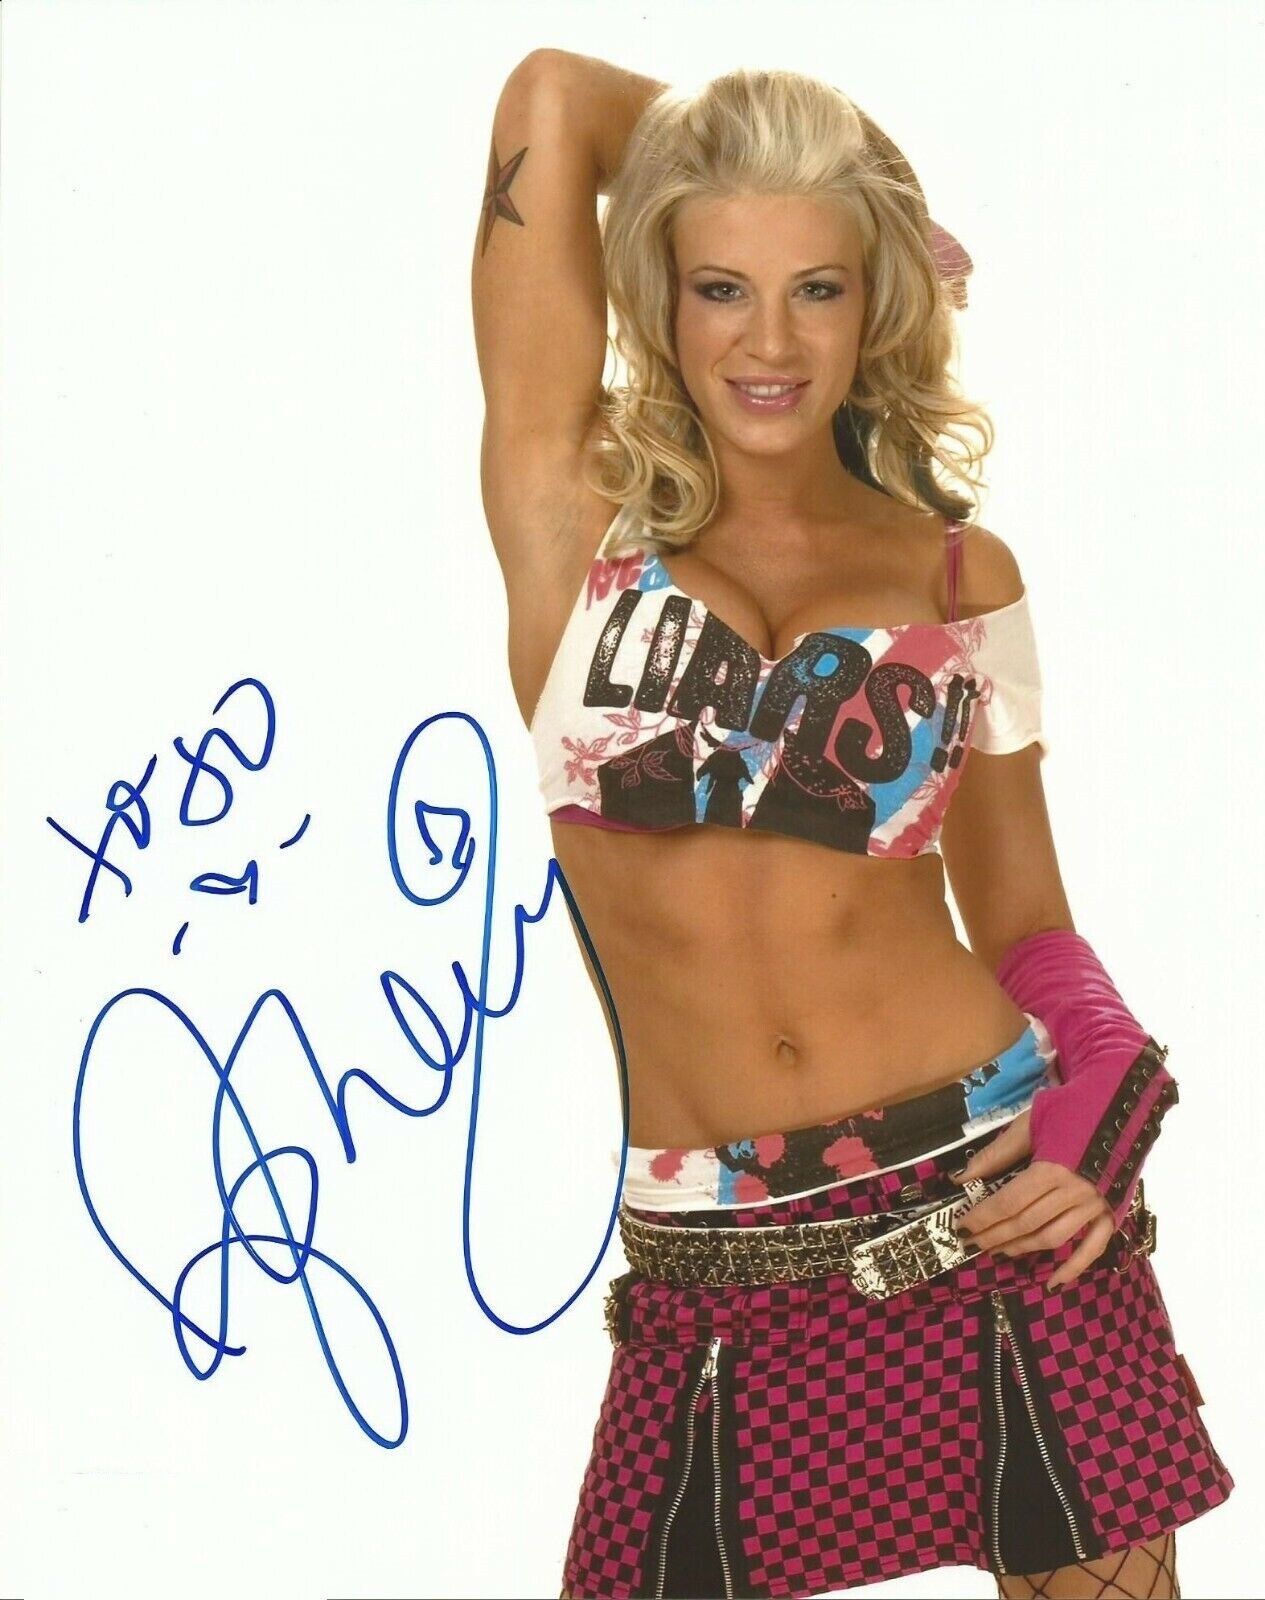 Ashley Massaro WWE WWF Diva Autographed Signed 8x10 Photo Poster painting REPRINT